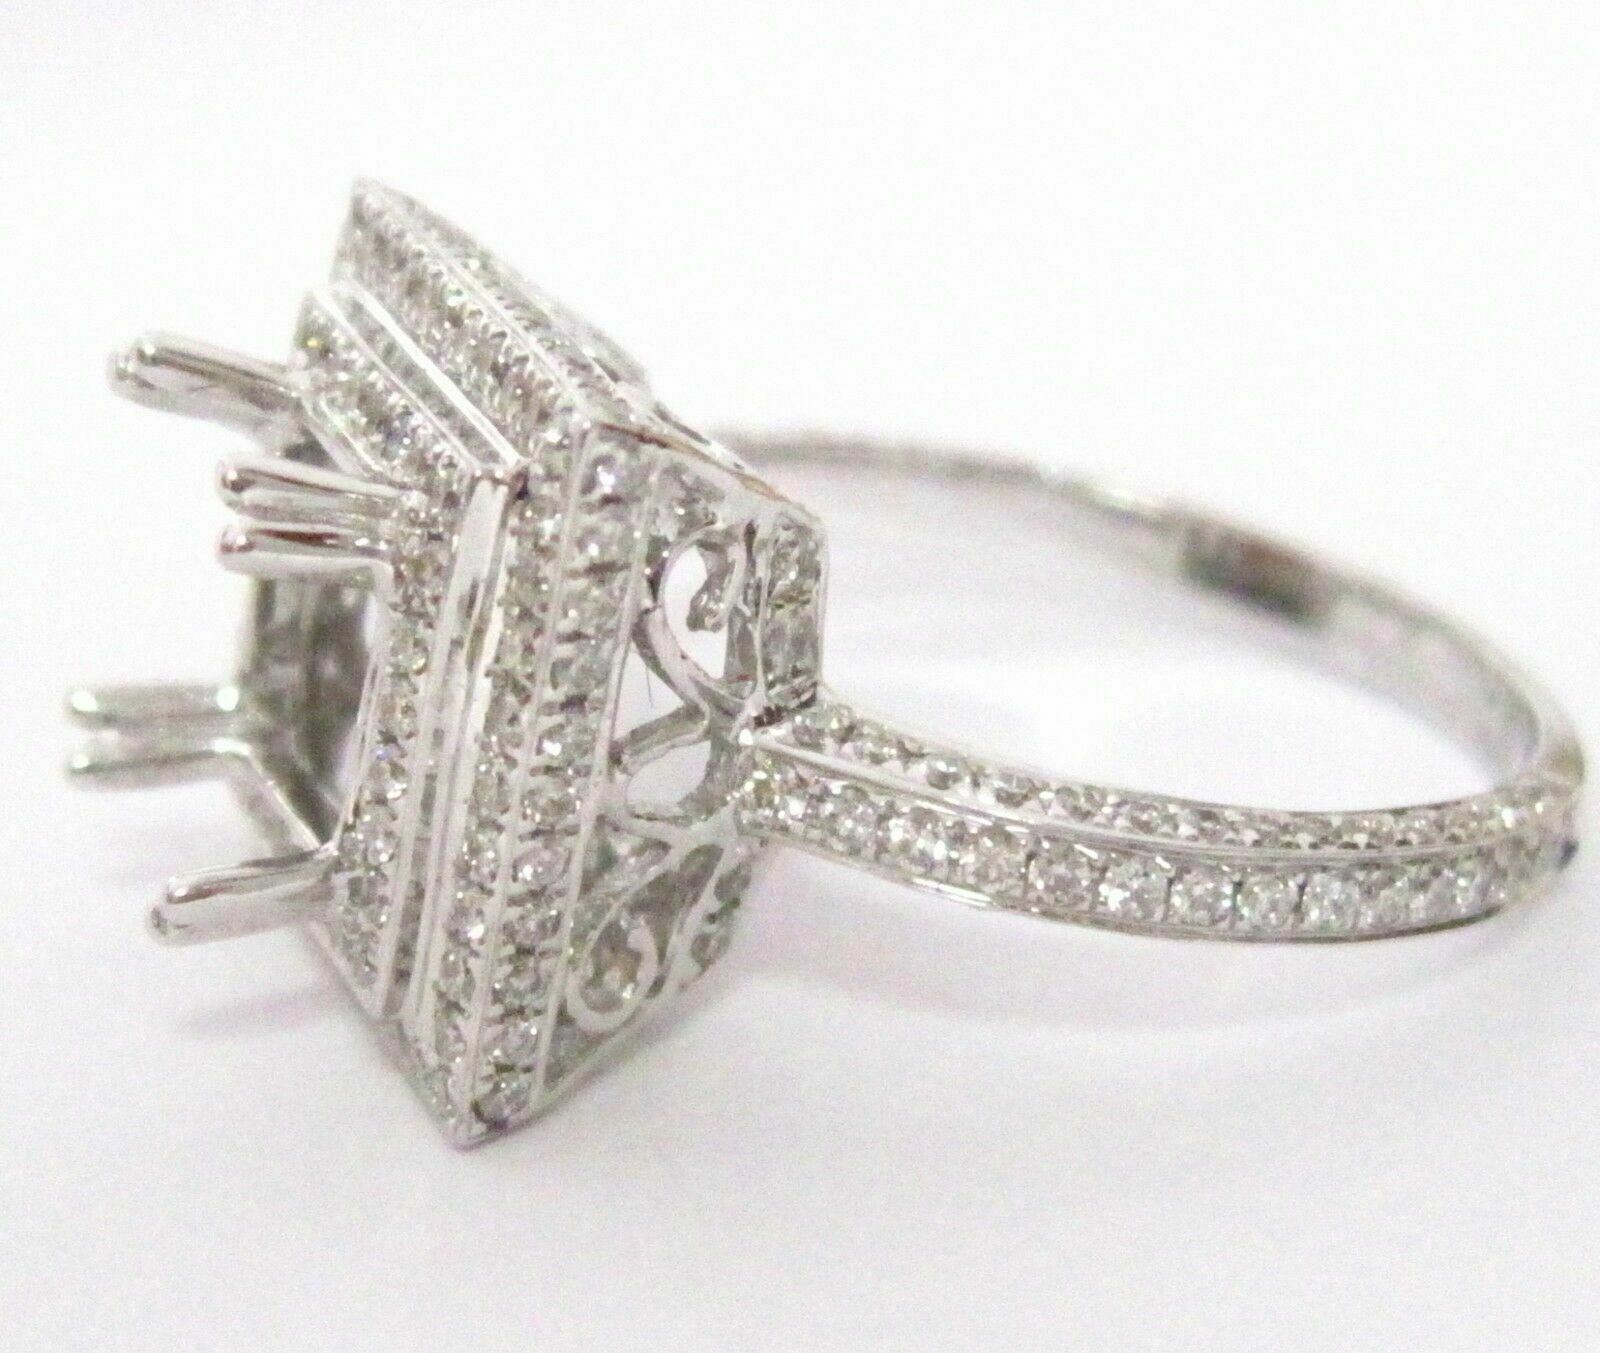 4 Prongs Semi-Mounting for PRINCESS or CUSHION Diamond Engagement Ring 18k W/G